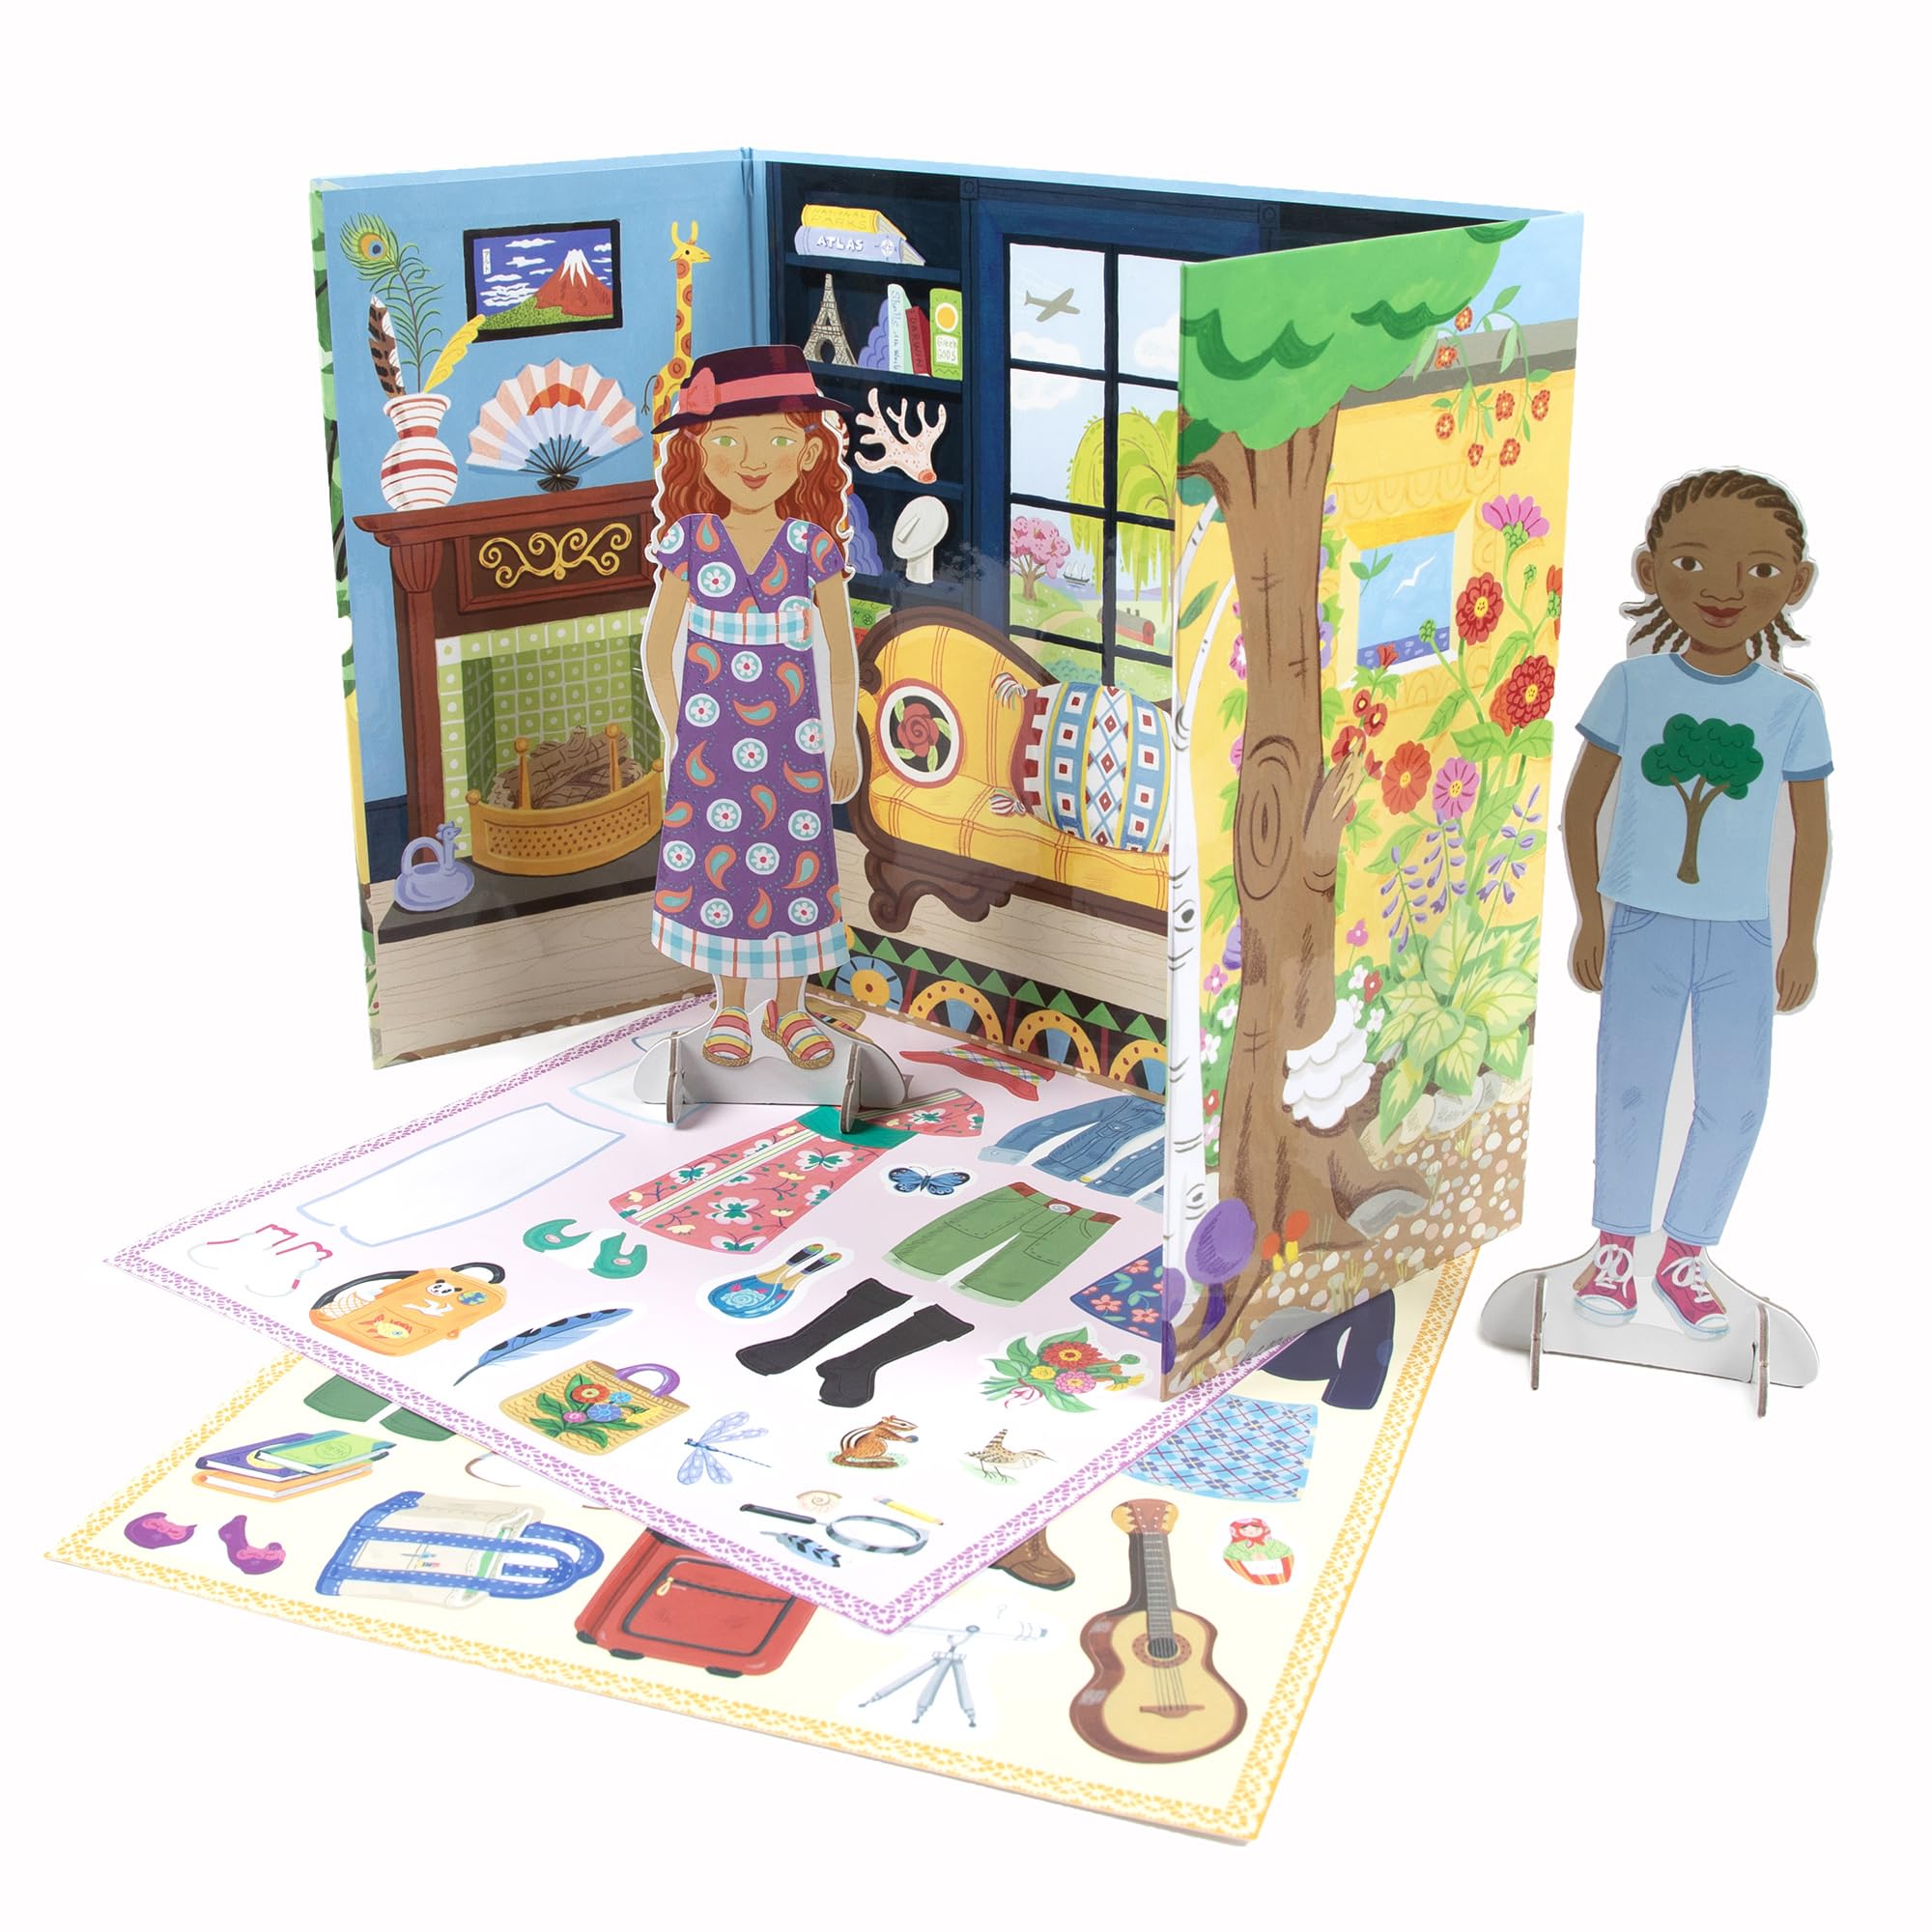 eeBoo: Paper Dolls: Explorer & Botanist - Includes 2 Paper Dolls, Stand Up Scene & Stickers, Kids Ages 5+